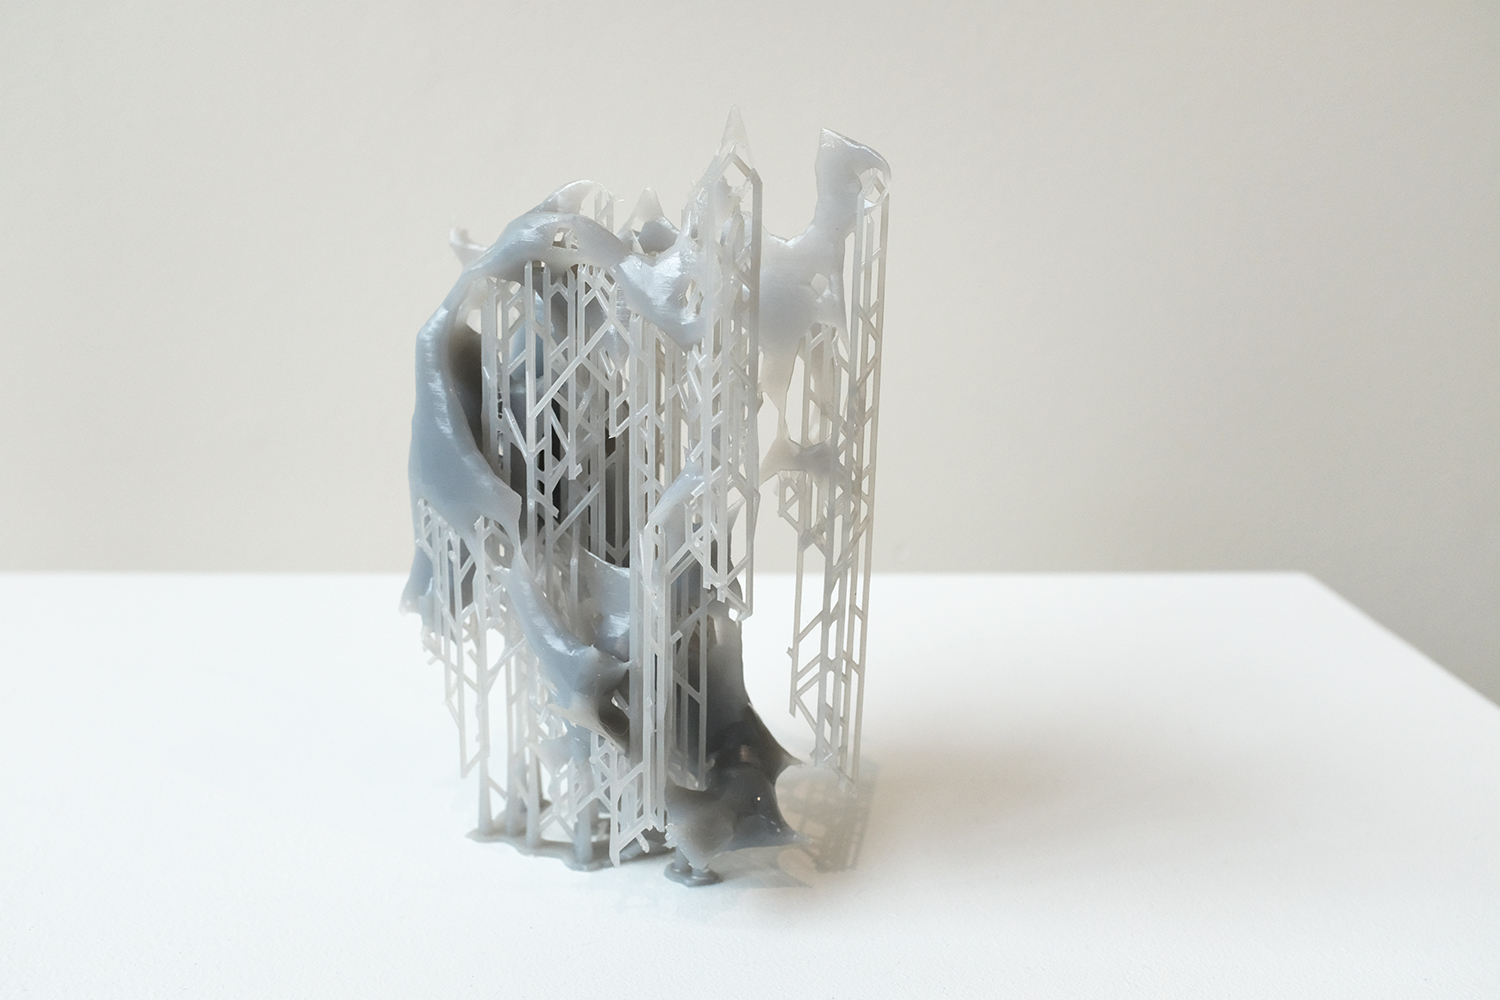 Guncotton 3D Print (Model 5), 2019, 6 x 4 x 4 inches